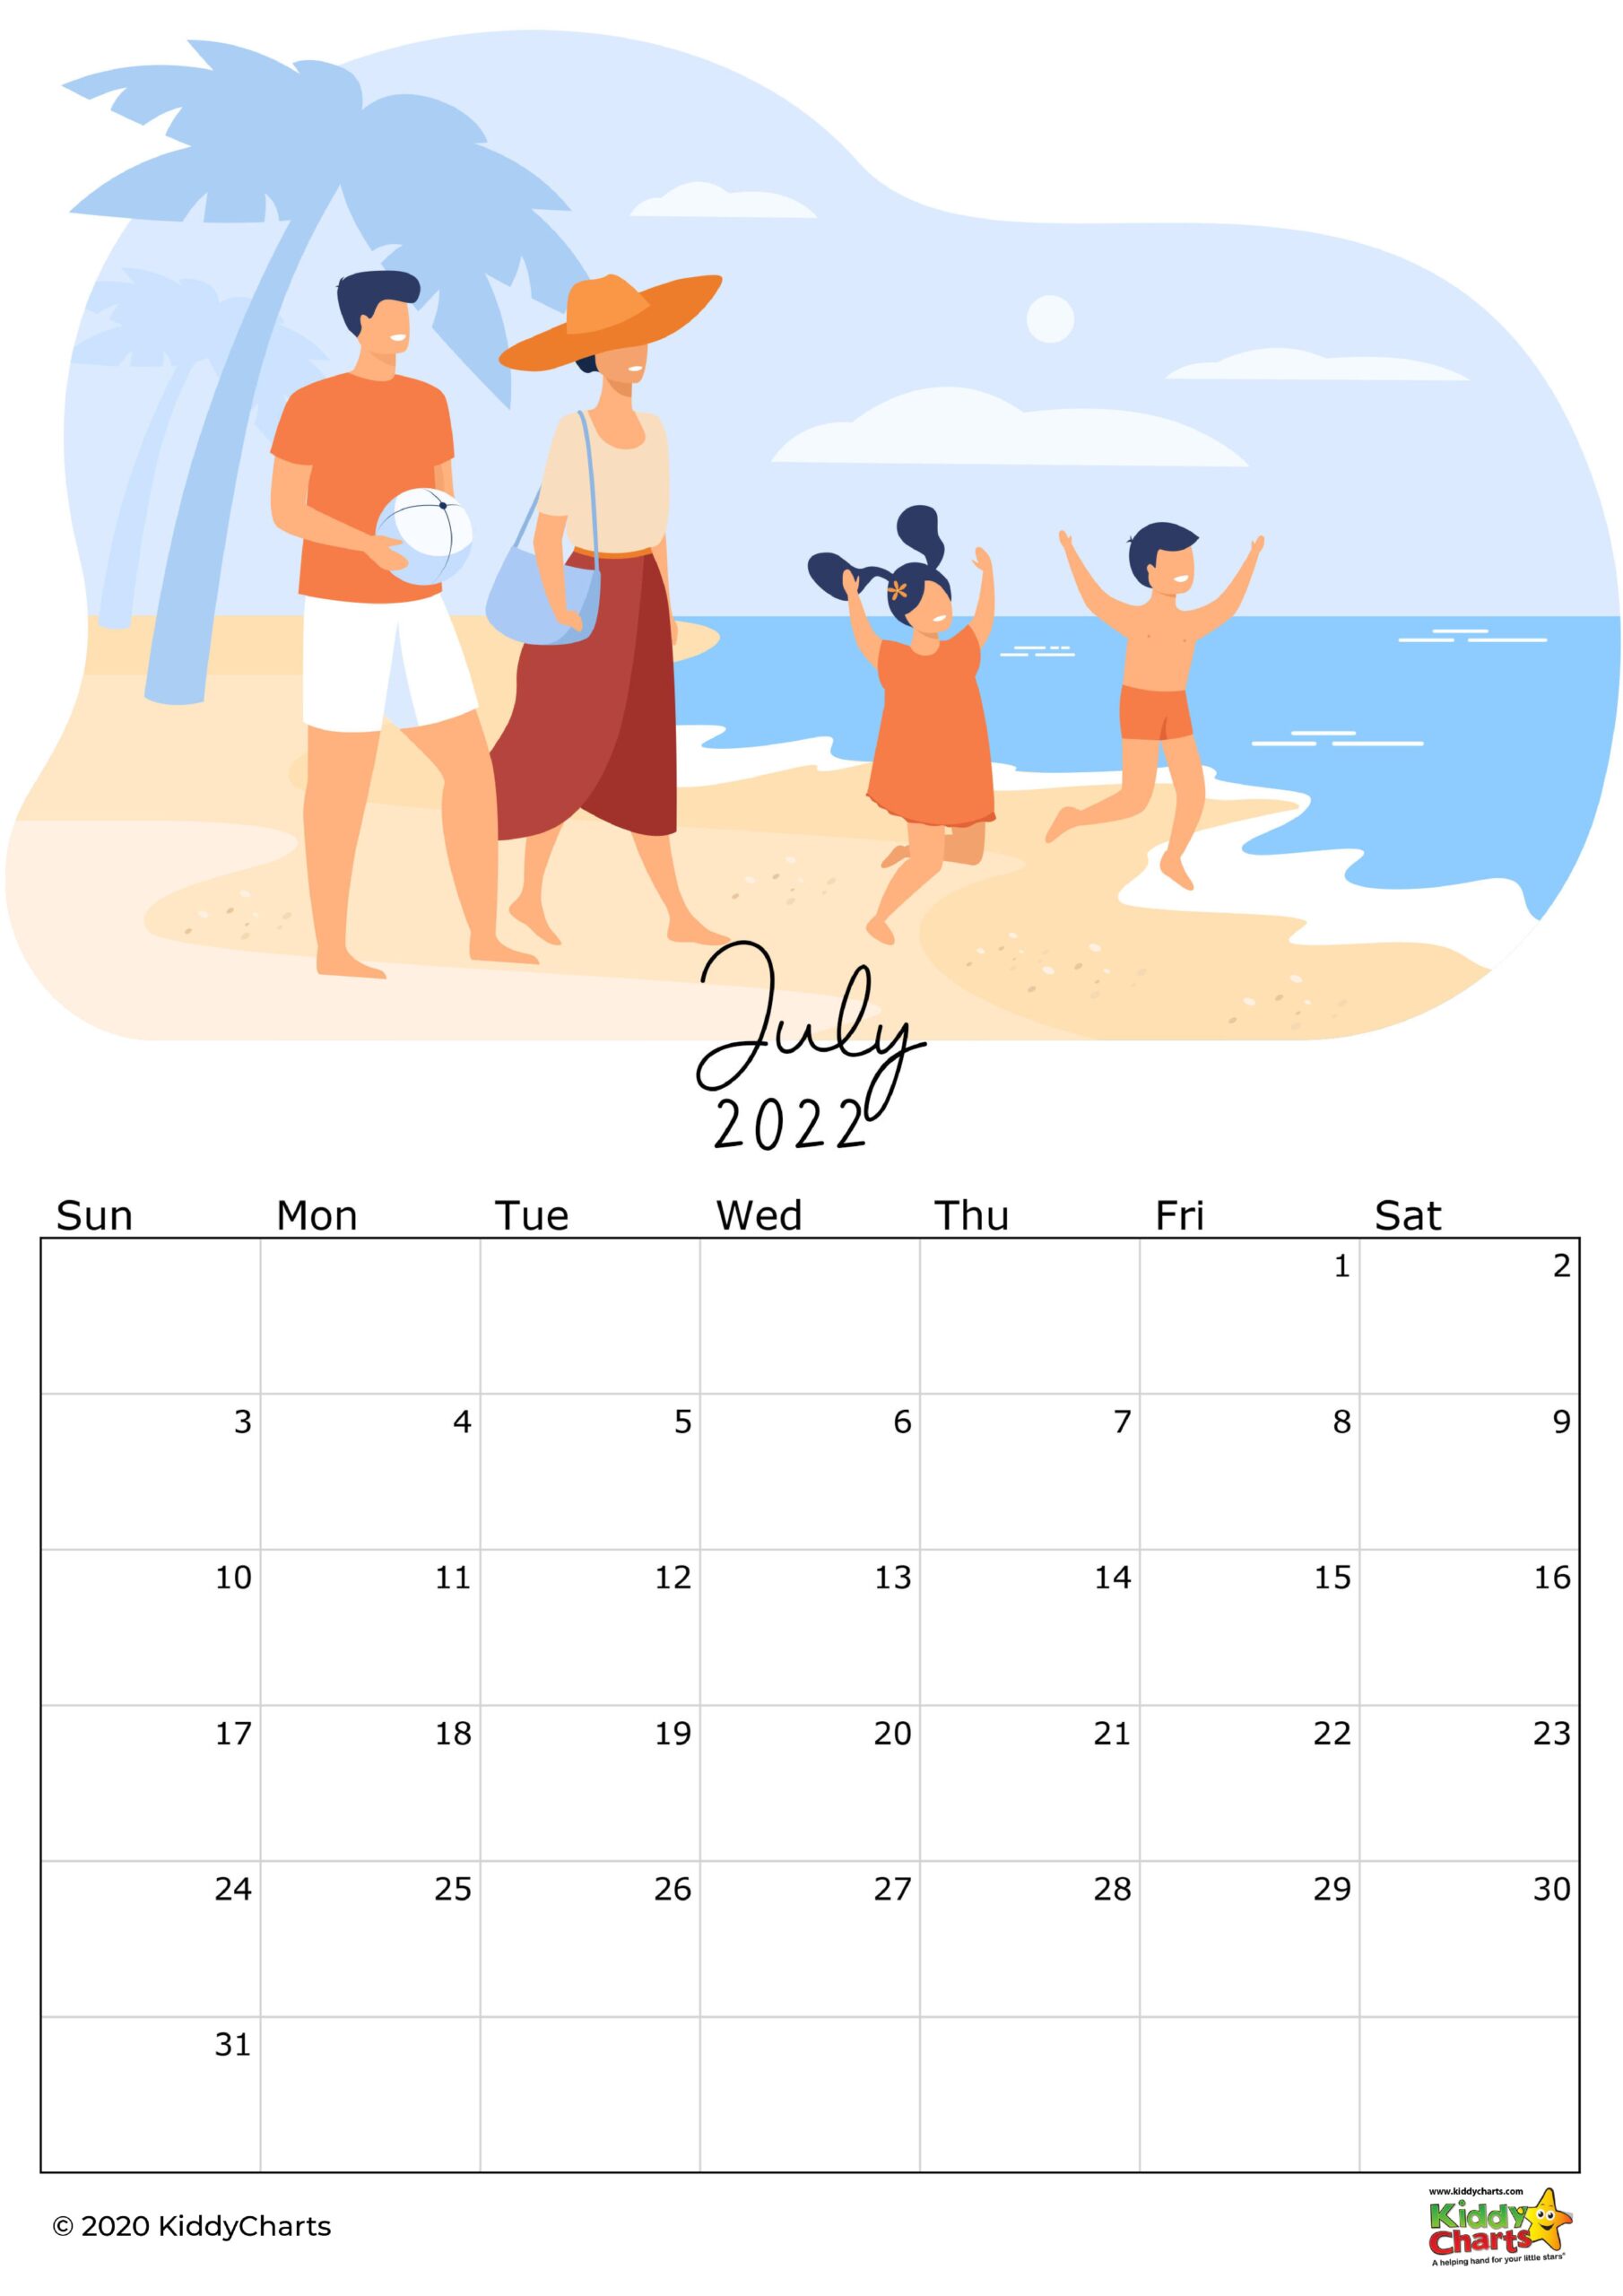 2022 calendar thats printable kids monthly snapshots kiddycharts com